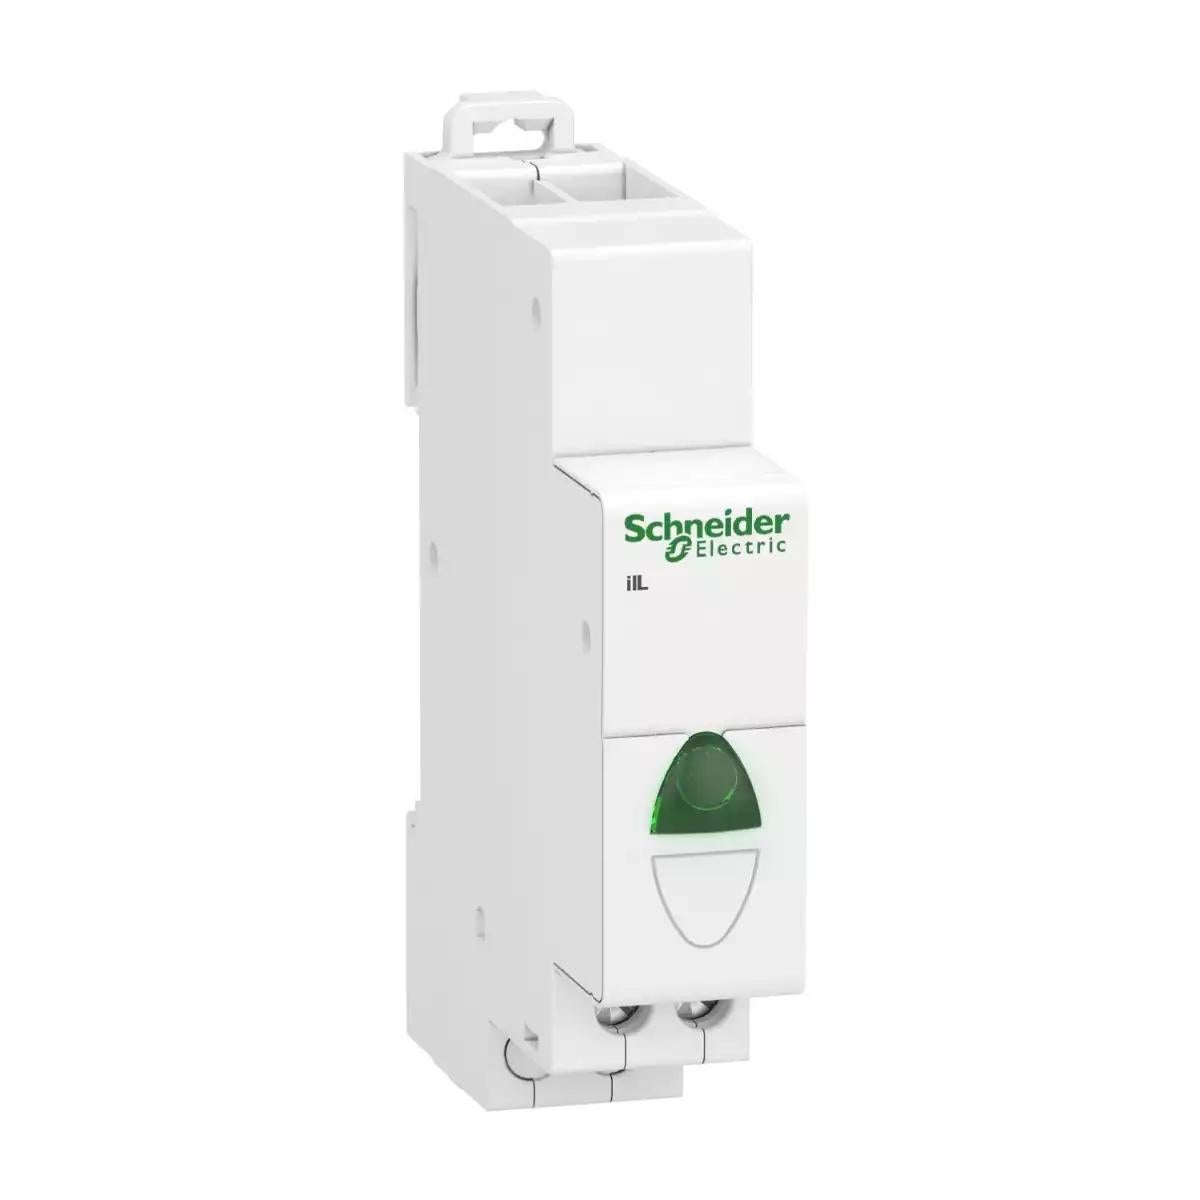 Schneider Electric Acti9 iIL single indicator light - Green - 110-230 Vac